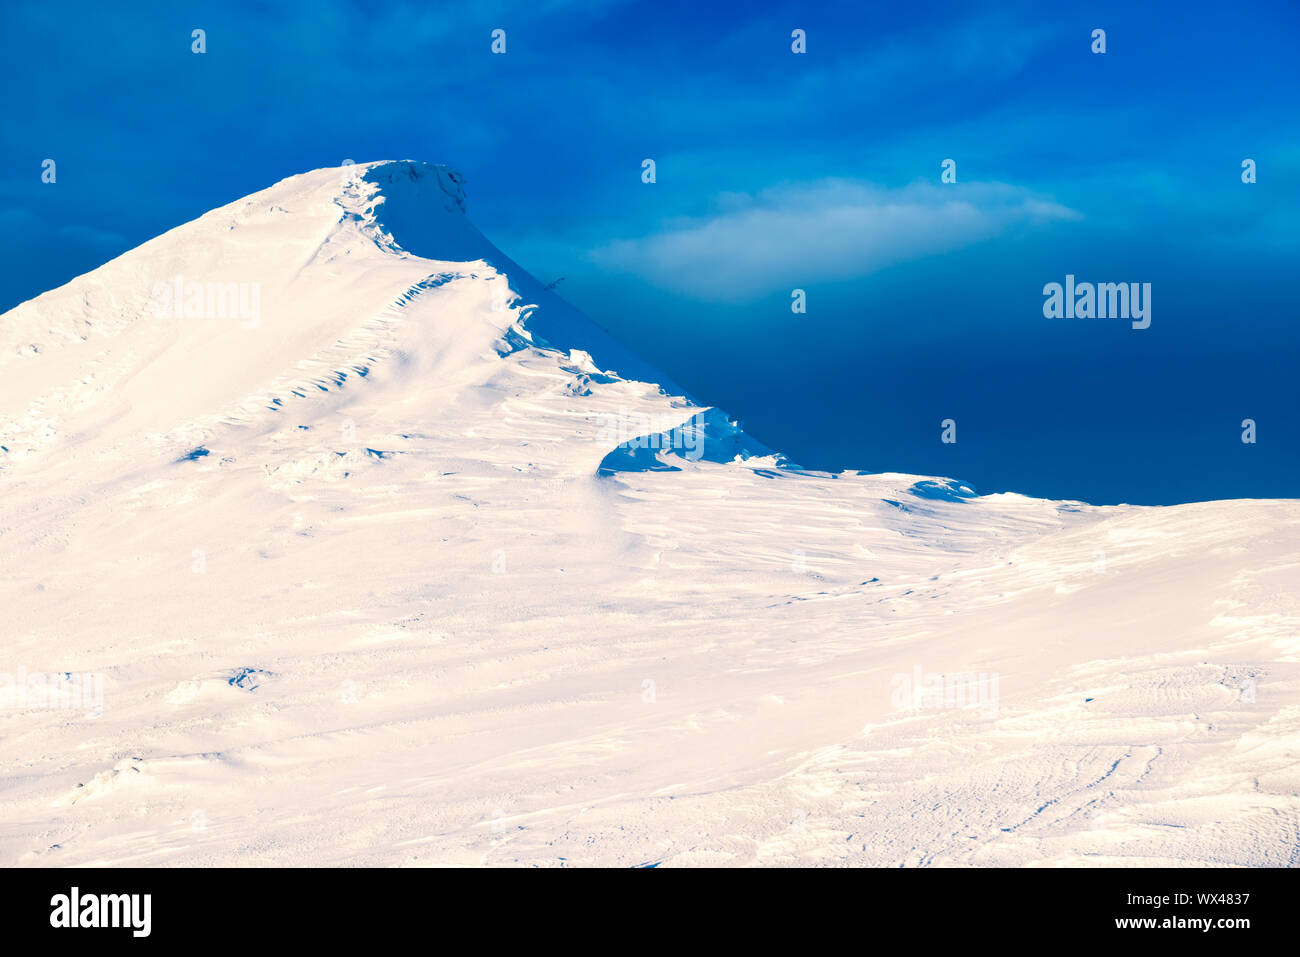 Mountain peak in snow Stock Photo